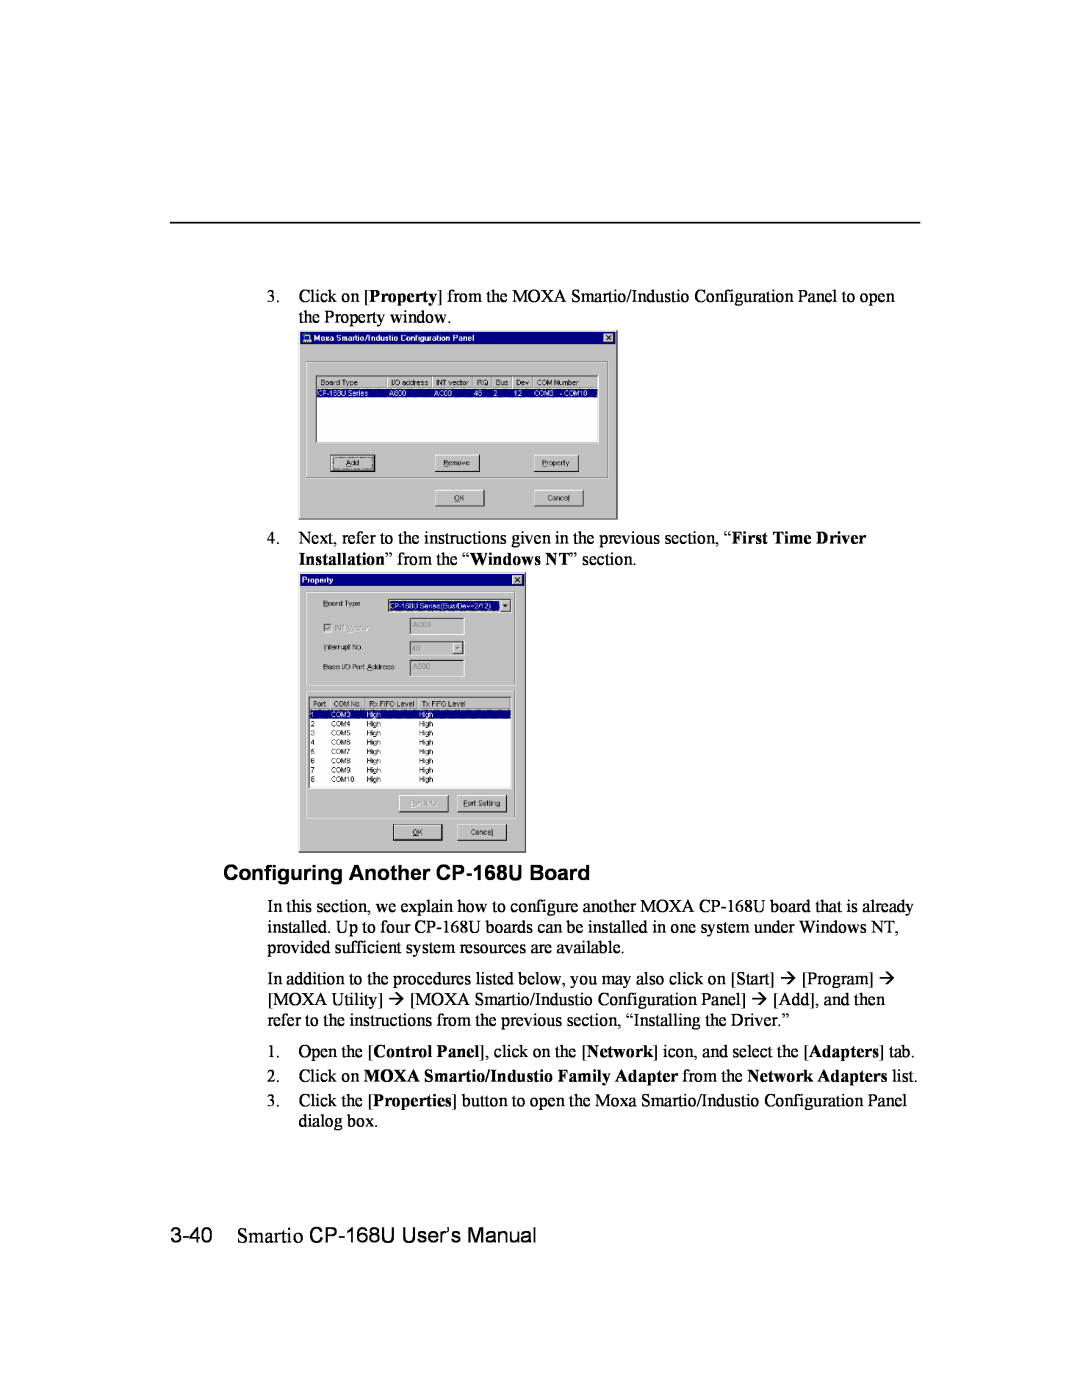 Moxa Technologies user manual Smartio CP-168U User’s Manual, Configuring Another CP-168U Board 